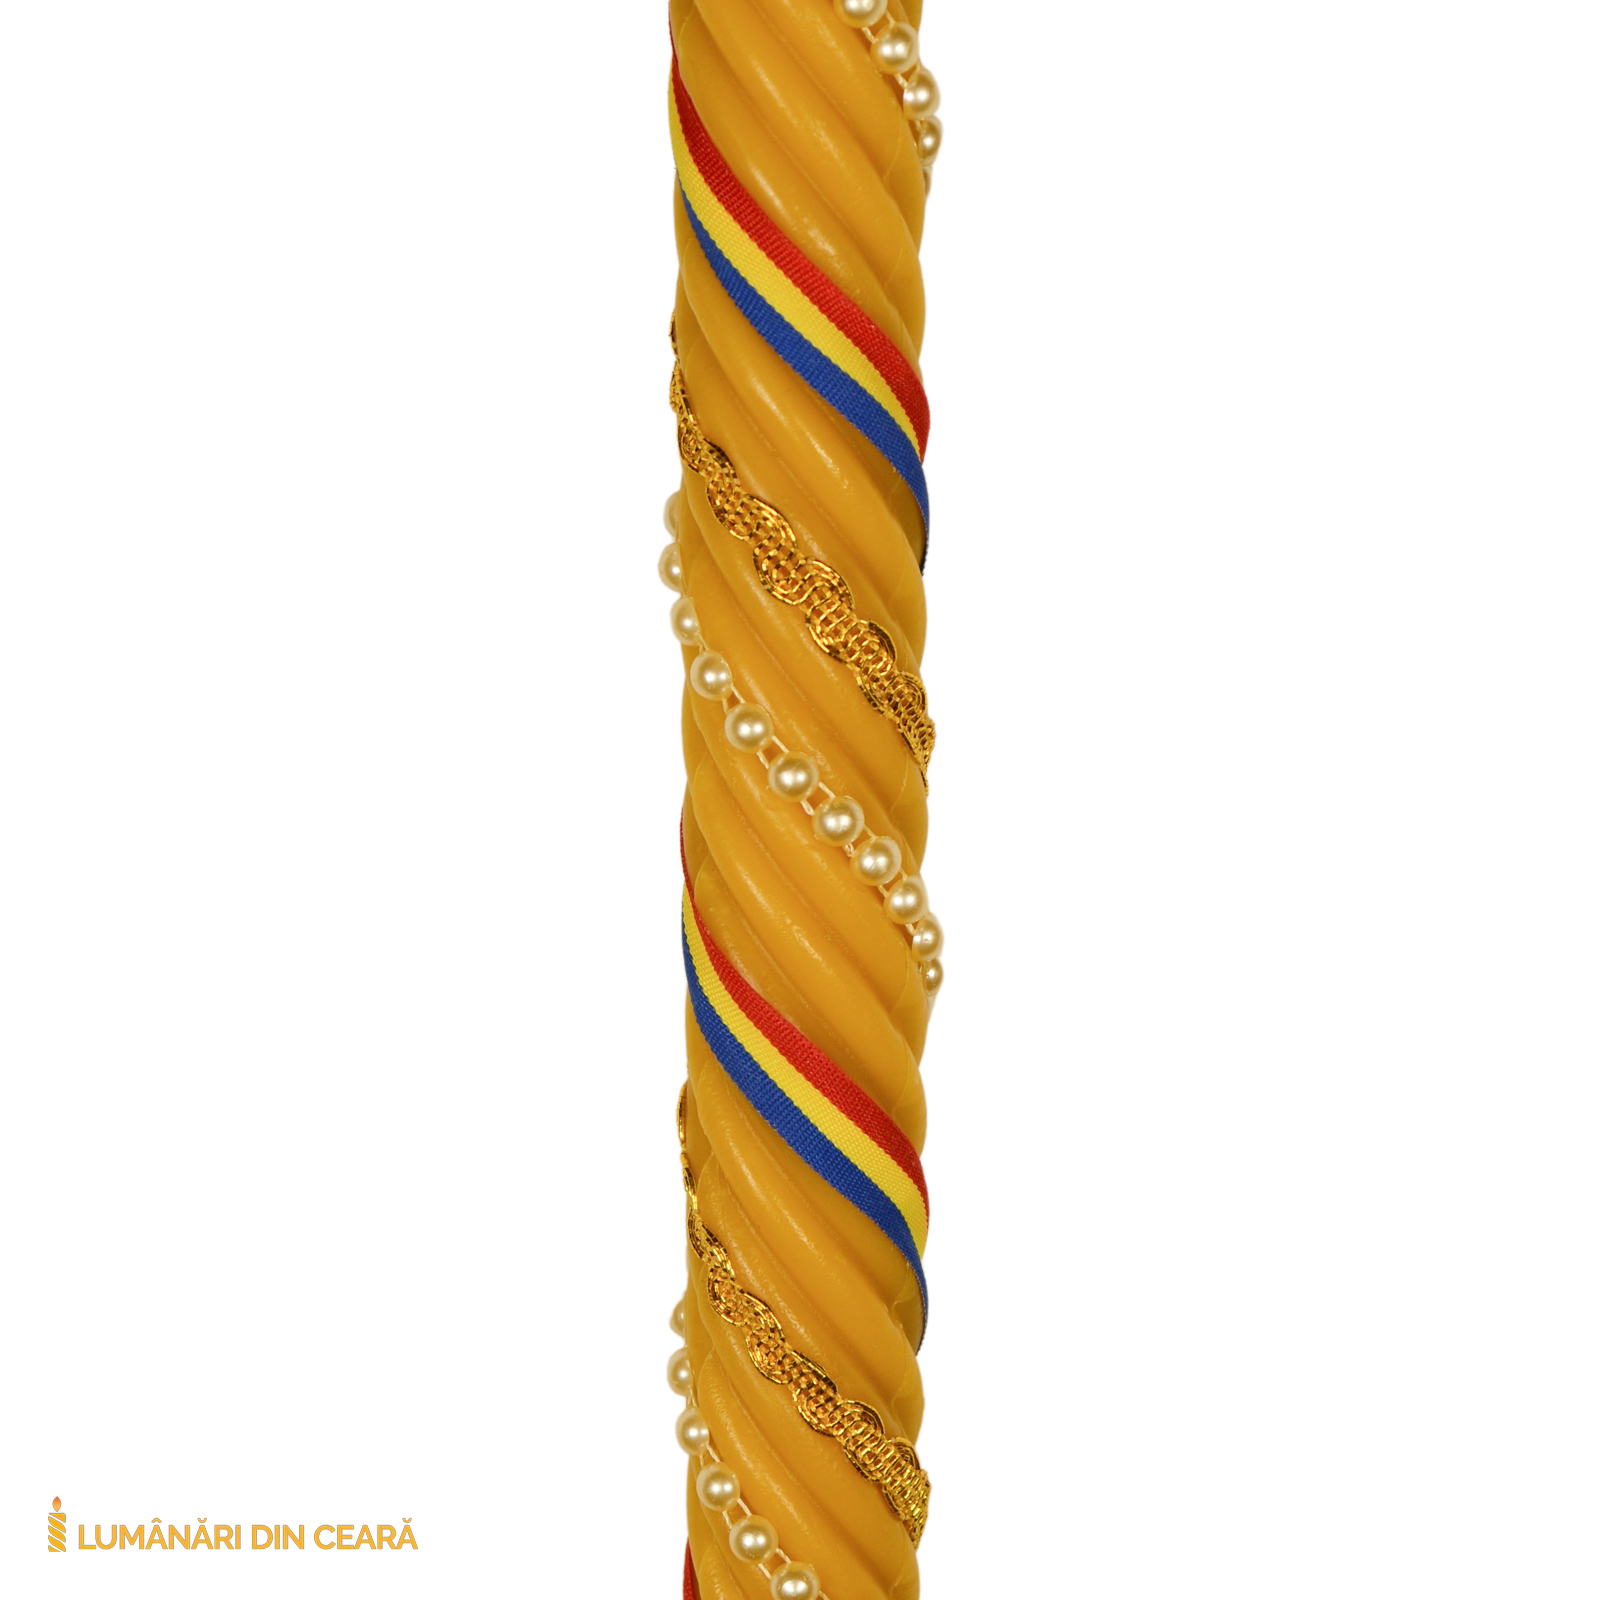 Lumanare impodobita spirala – model tricolor (9)